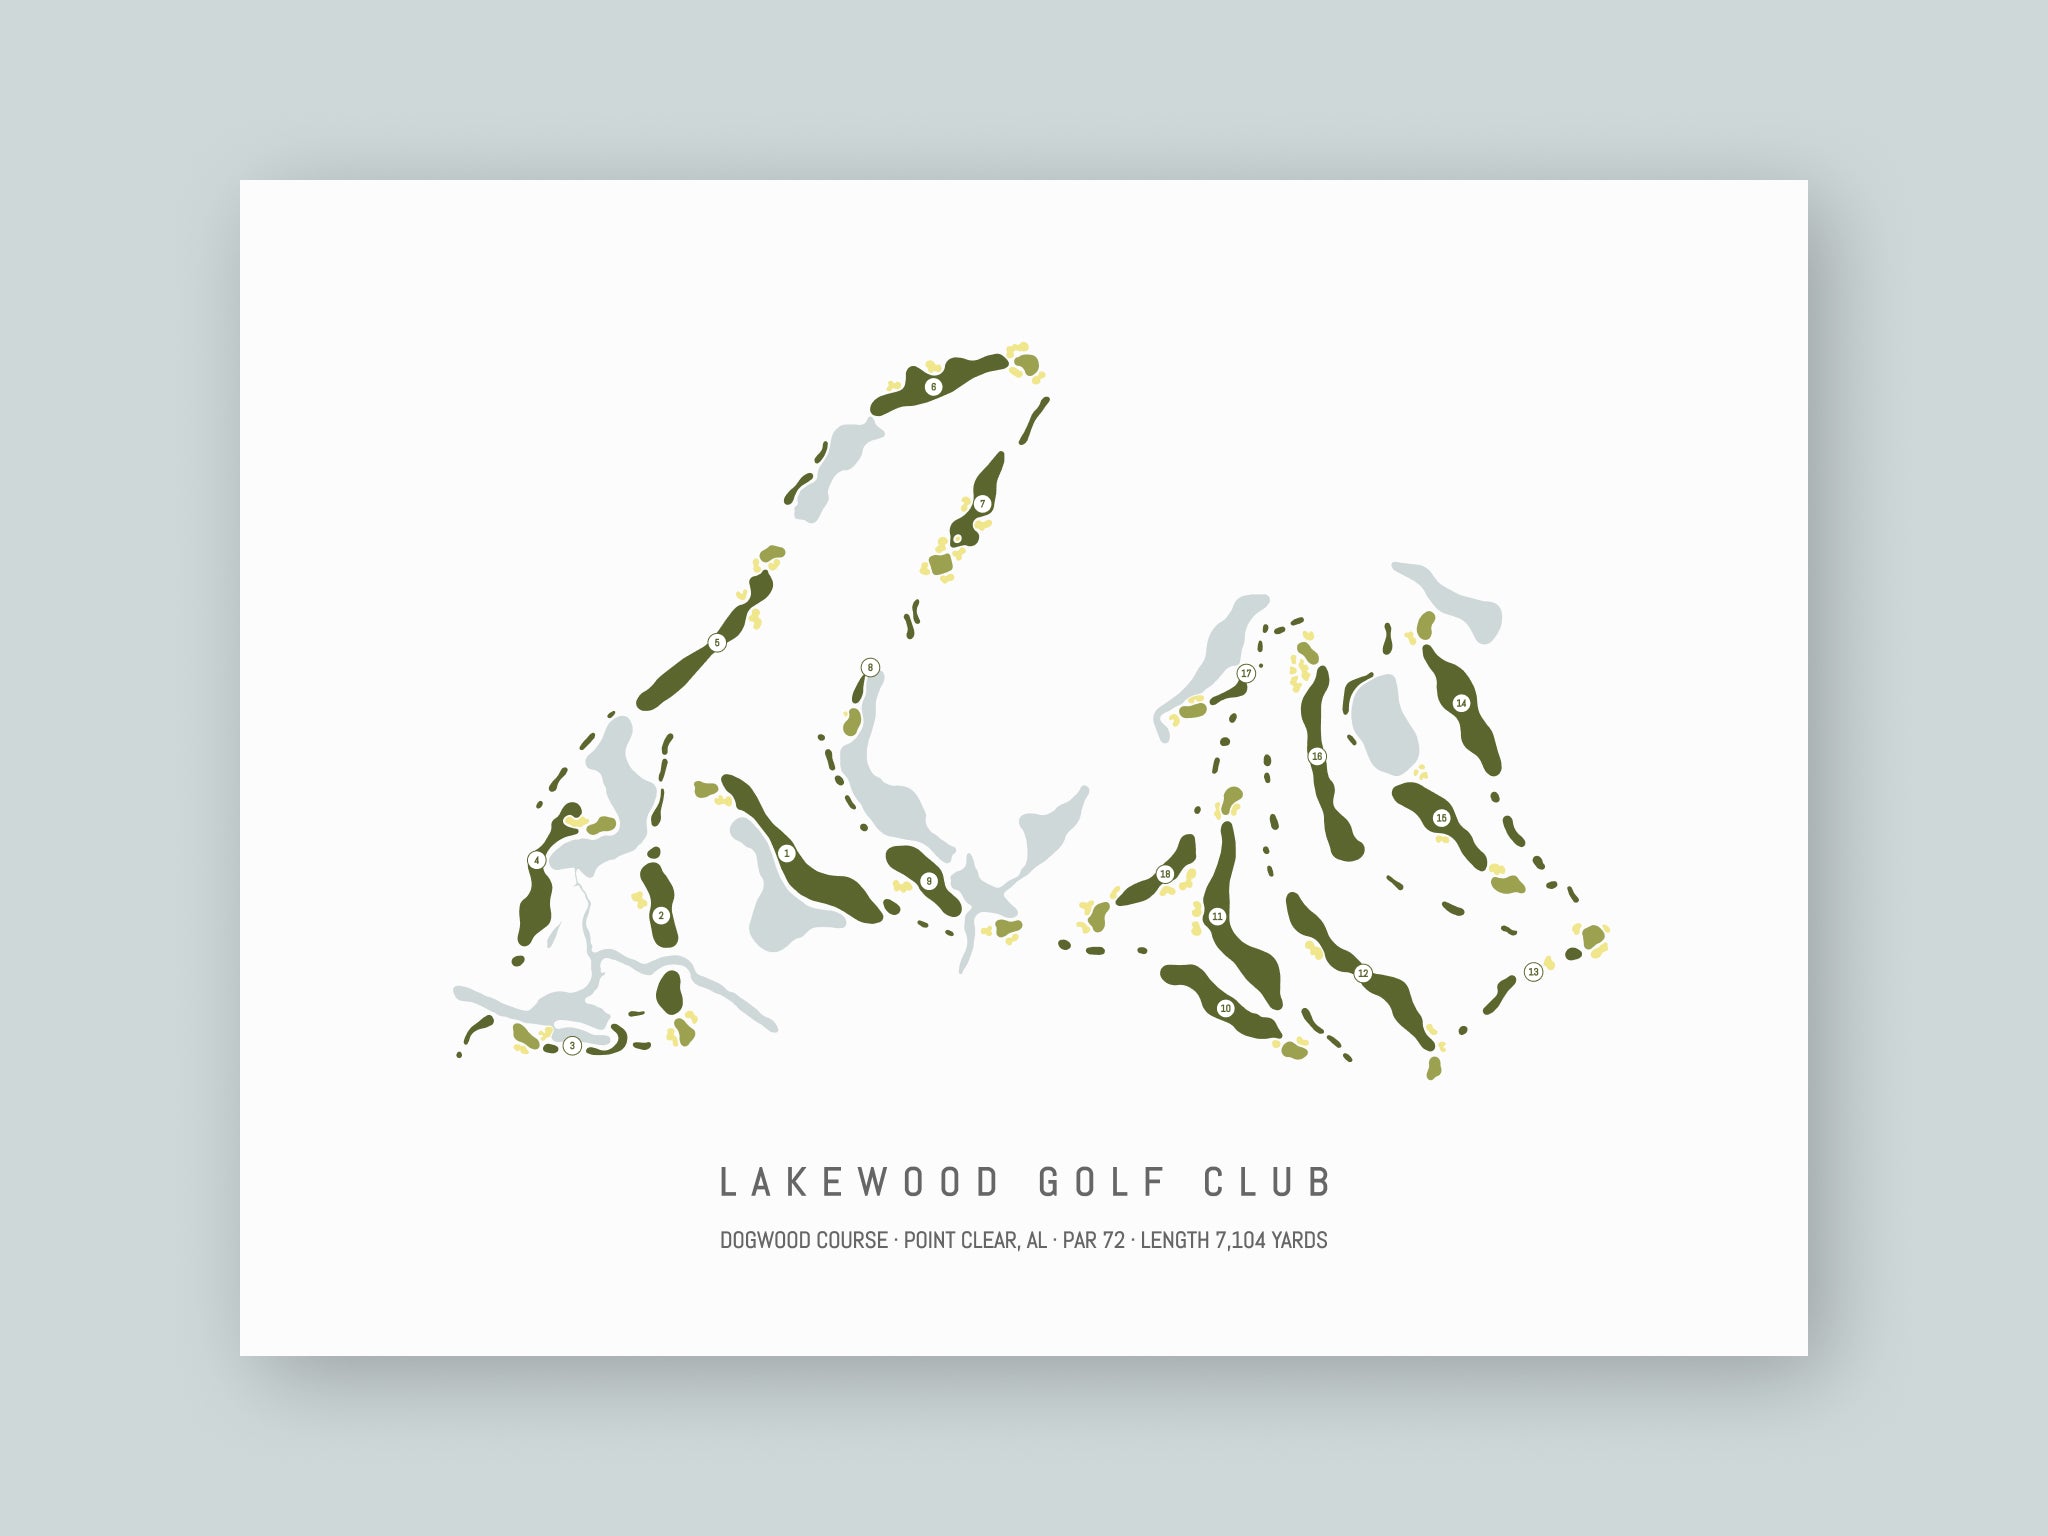 Lakewood-Golf-Club-Dogwood-Course-AL--Unframed-24x18-With-Hole-Numbers